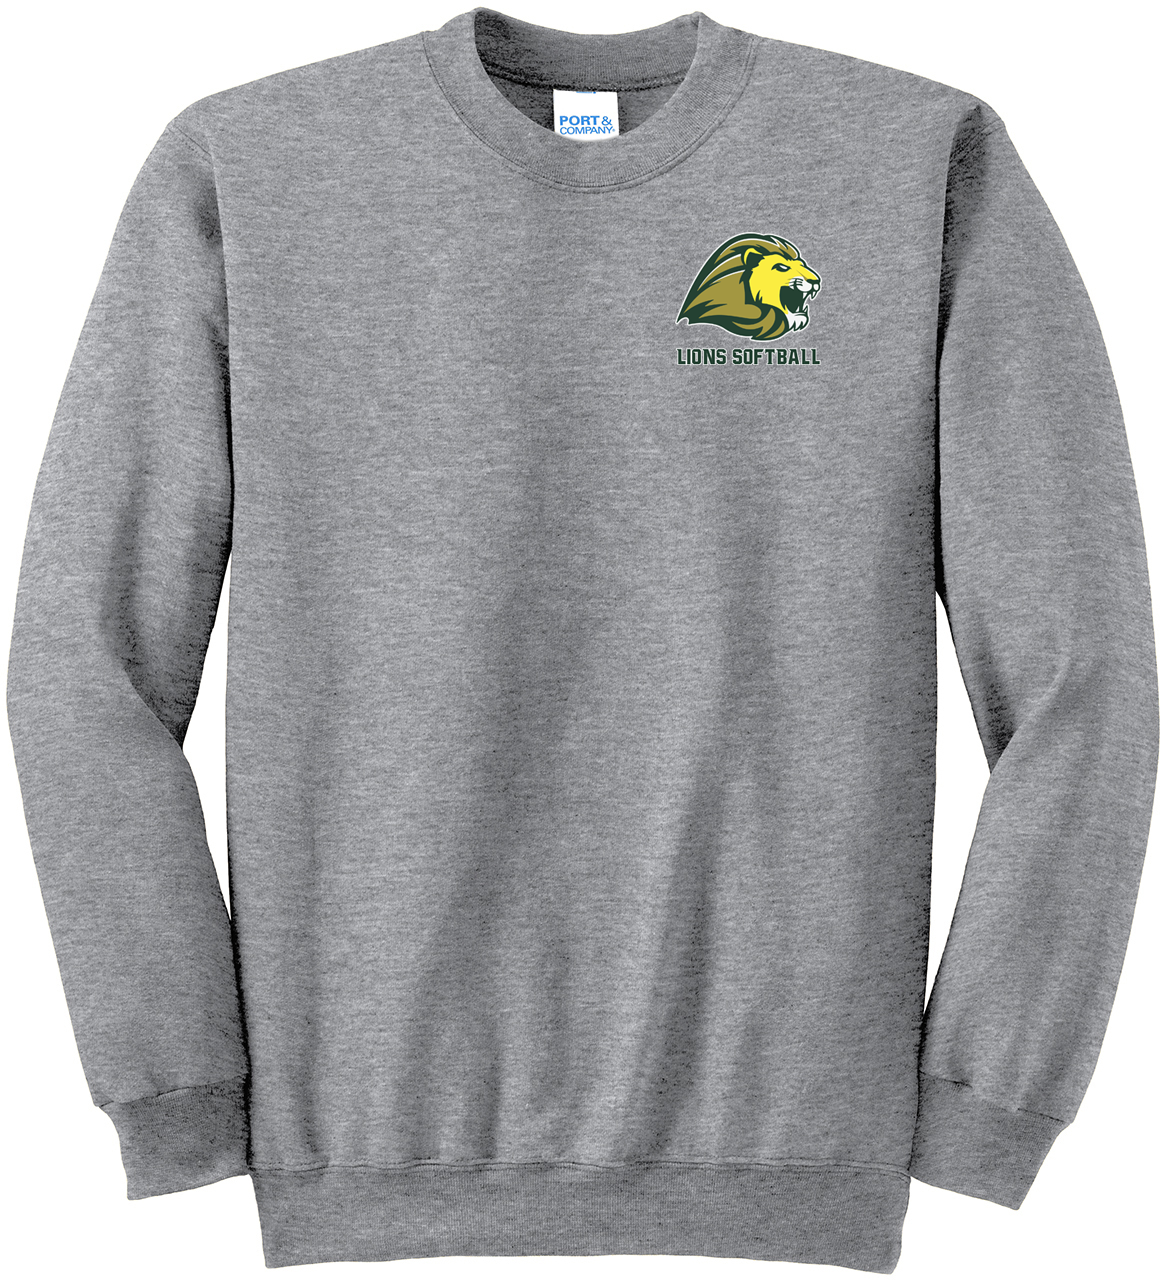 EP Lions Softball Crew Neck Sweater